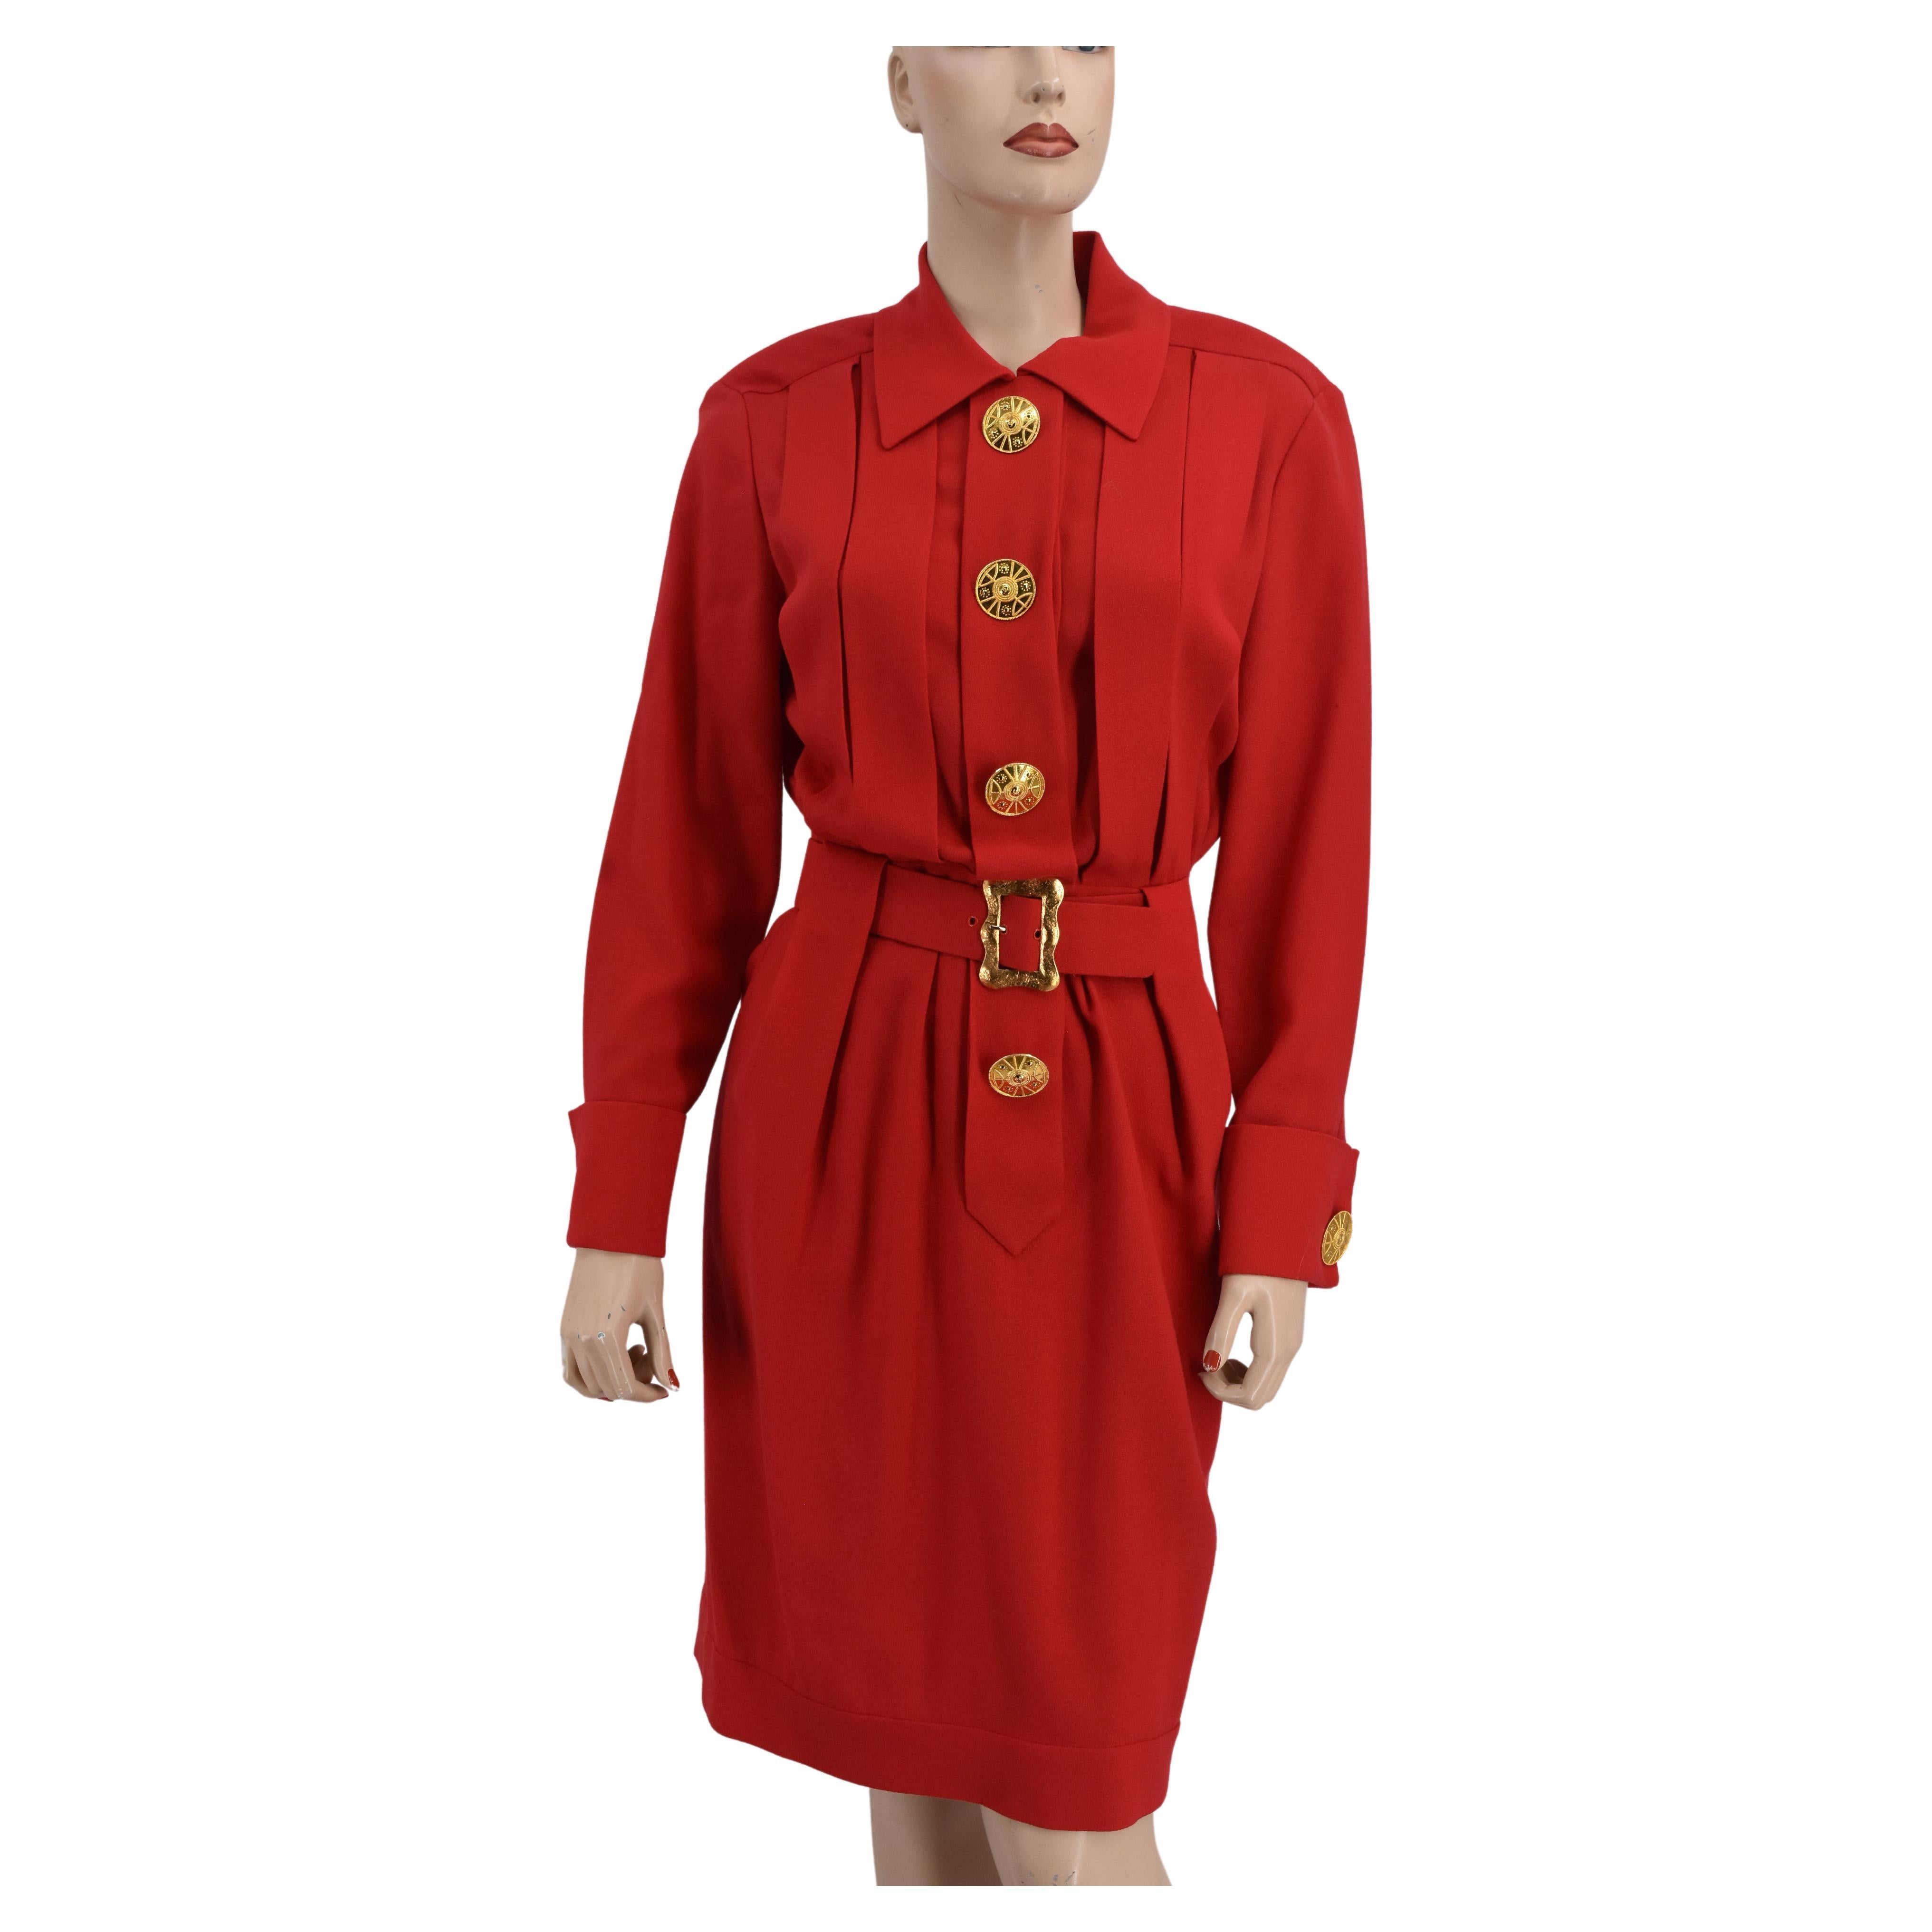 Chanel Boutique elegant Red Dress 38 Mint For Sale